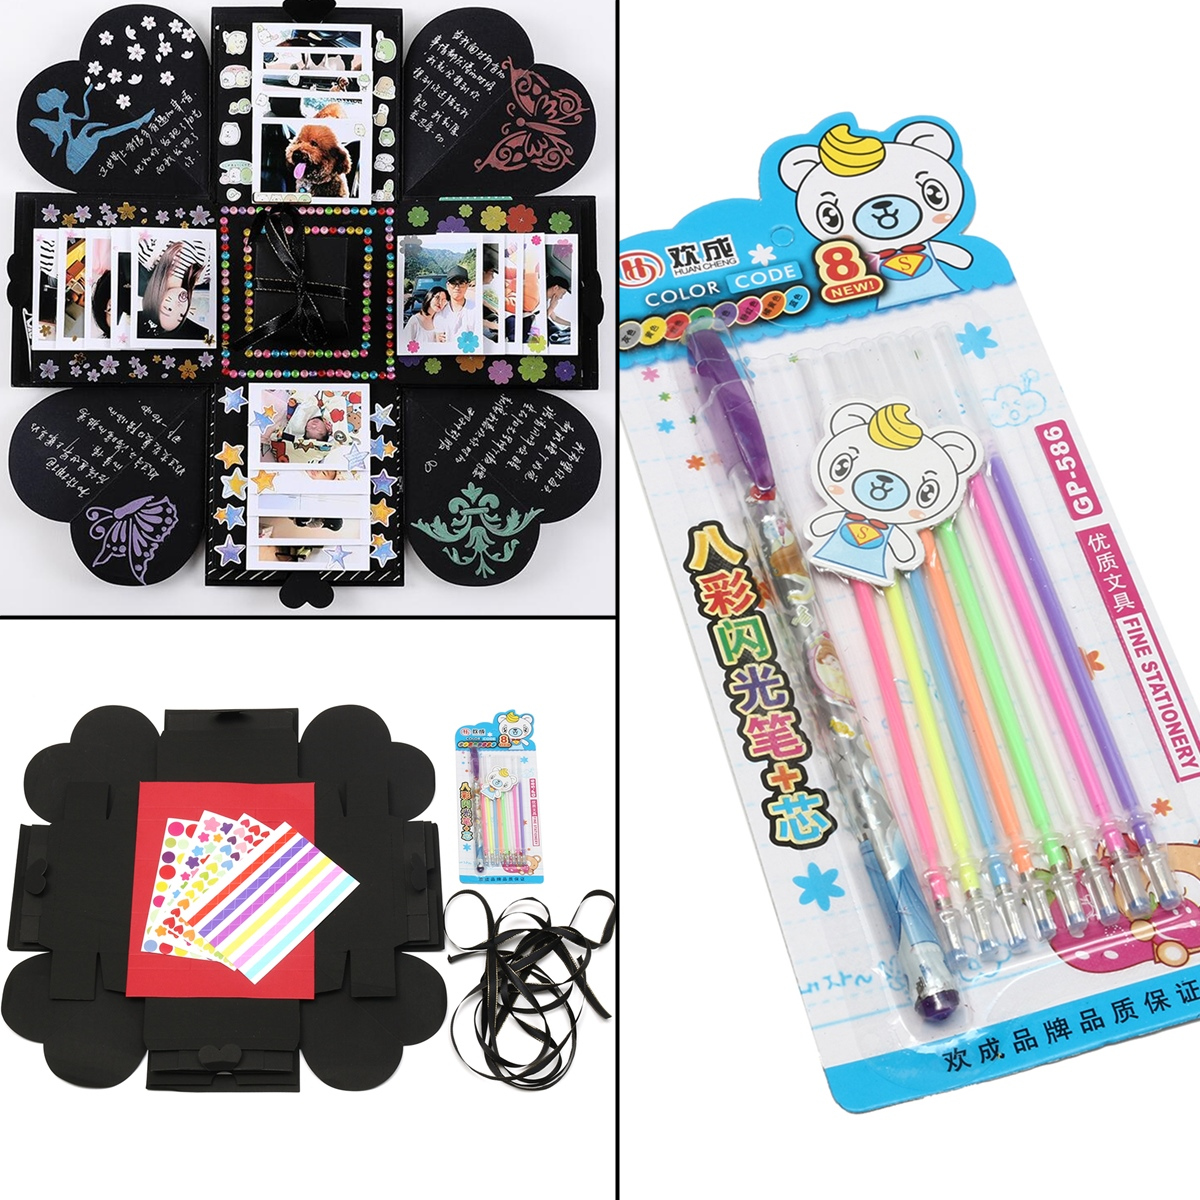 Creative-DIY-Manual-Explosion-Box-Memory-Scrapbook-Photo-Album-Craft-Kits-Gifts-1310904-4